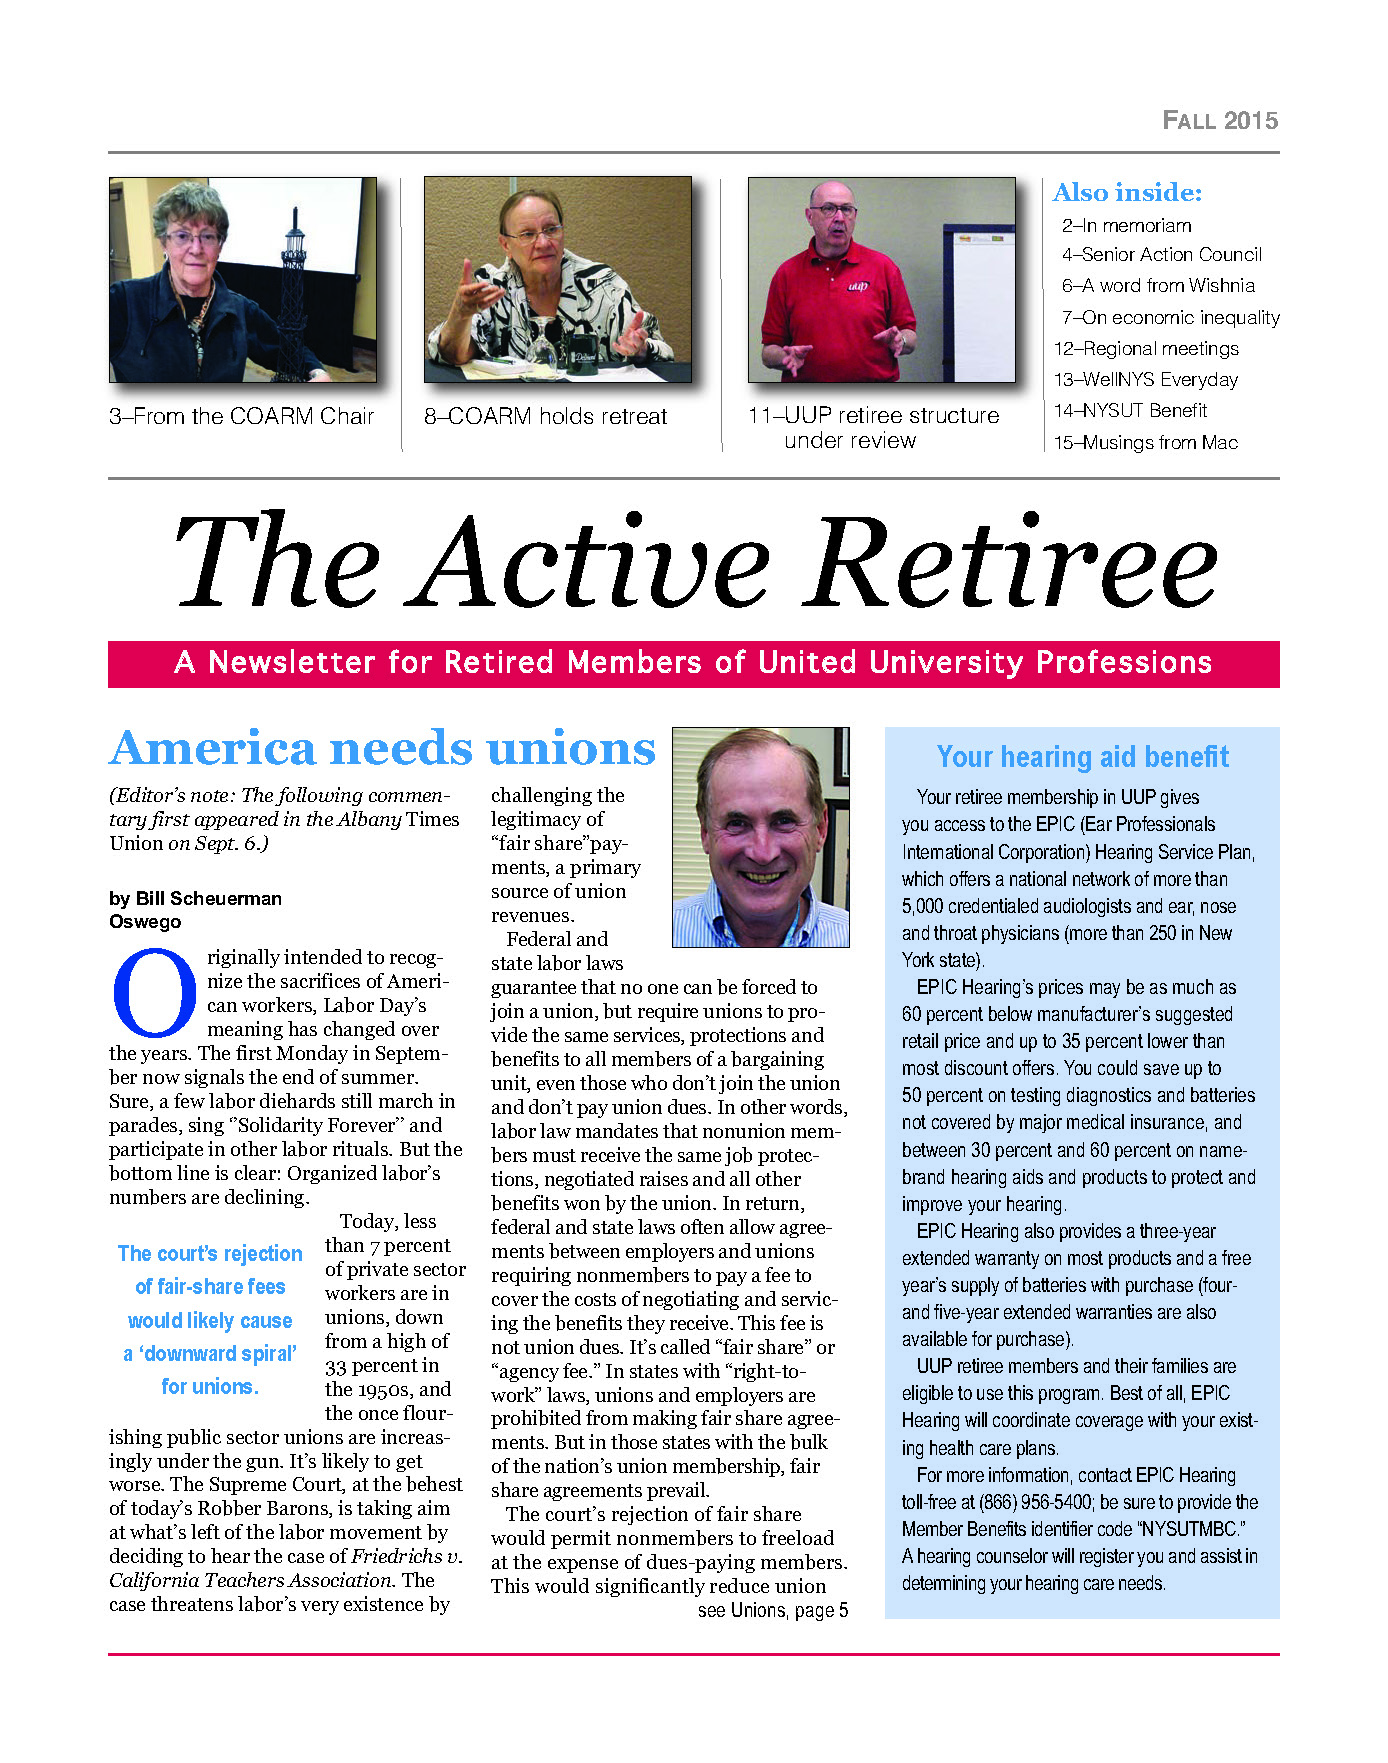 Fall 2015 Active Retiree